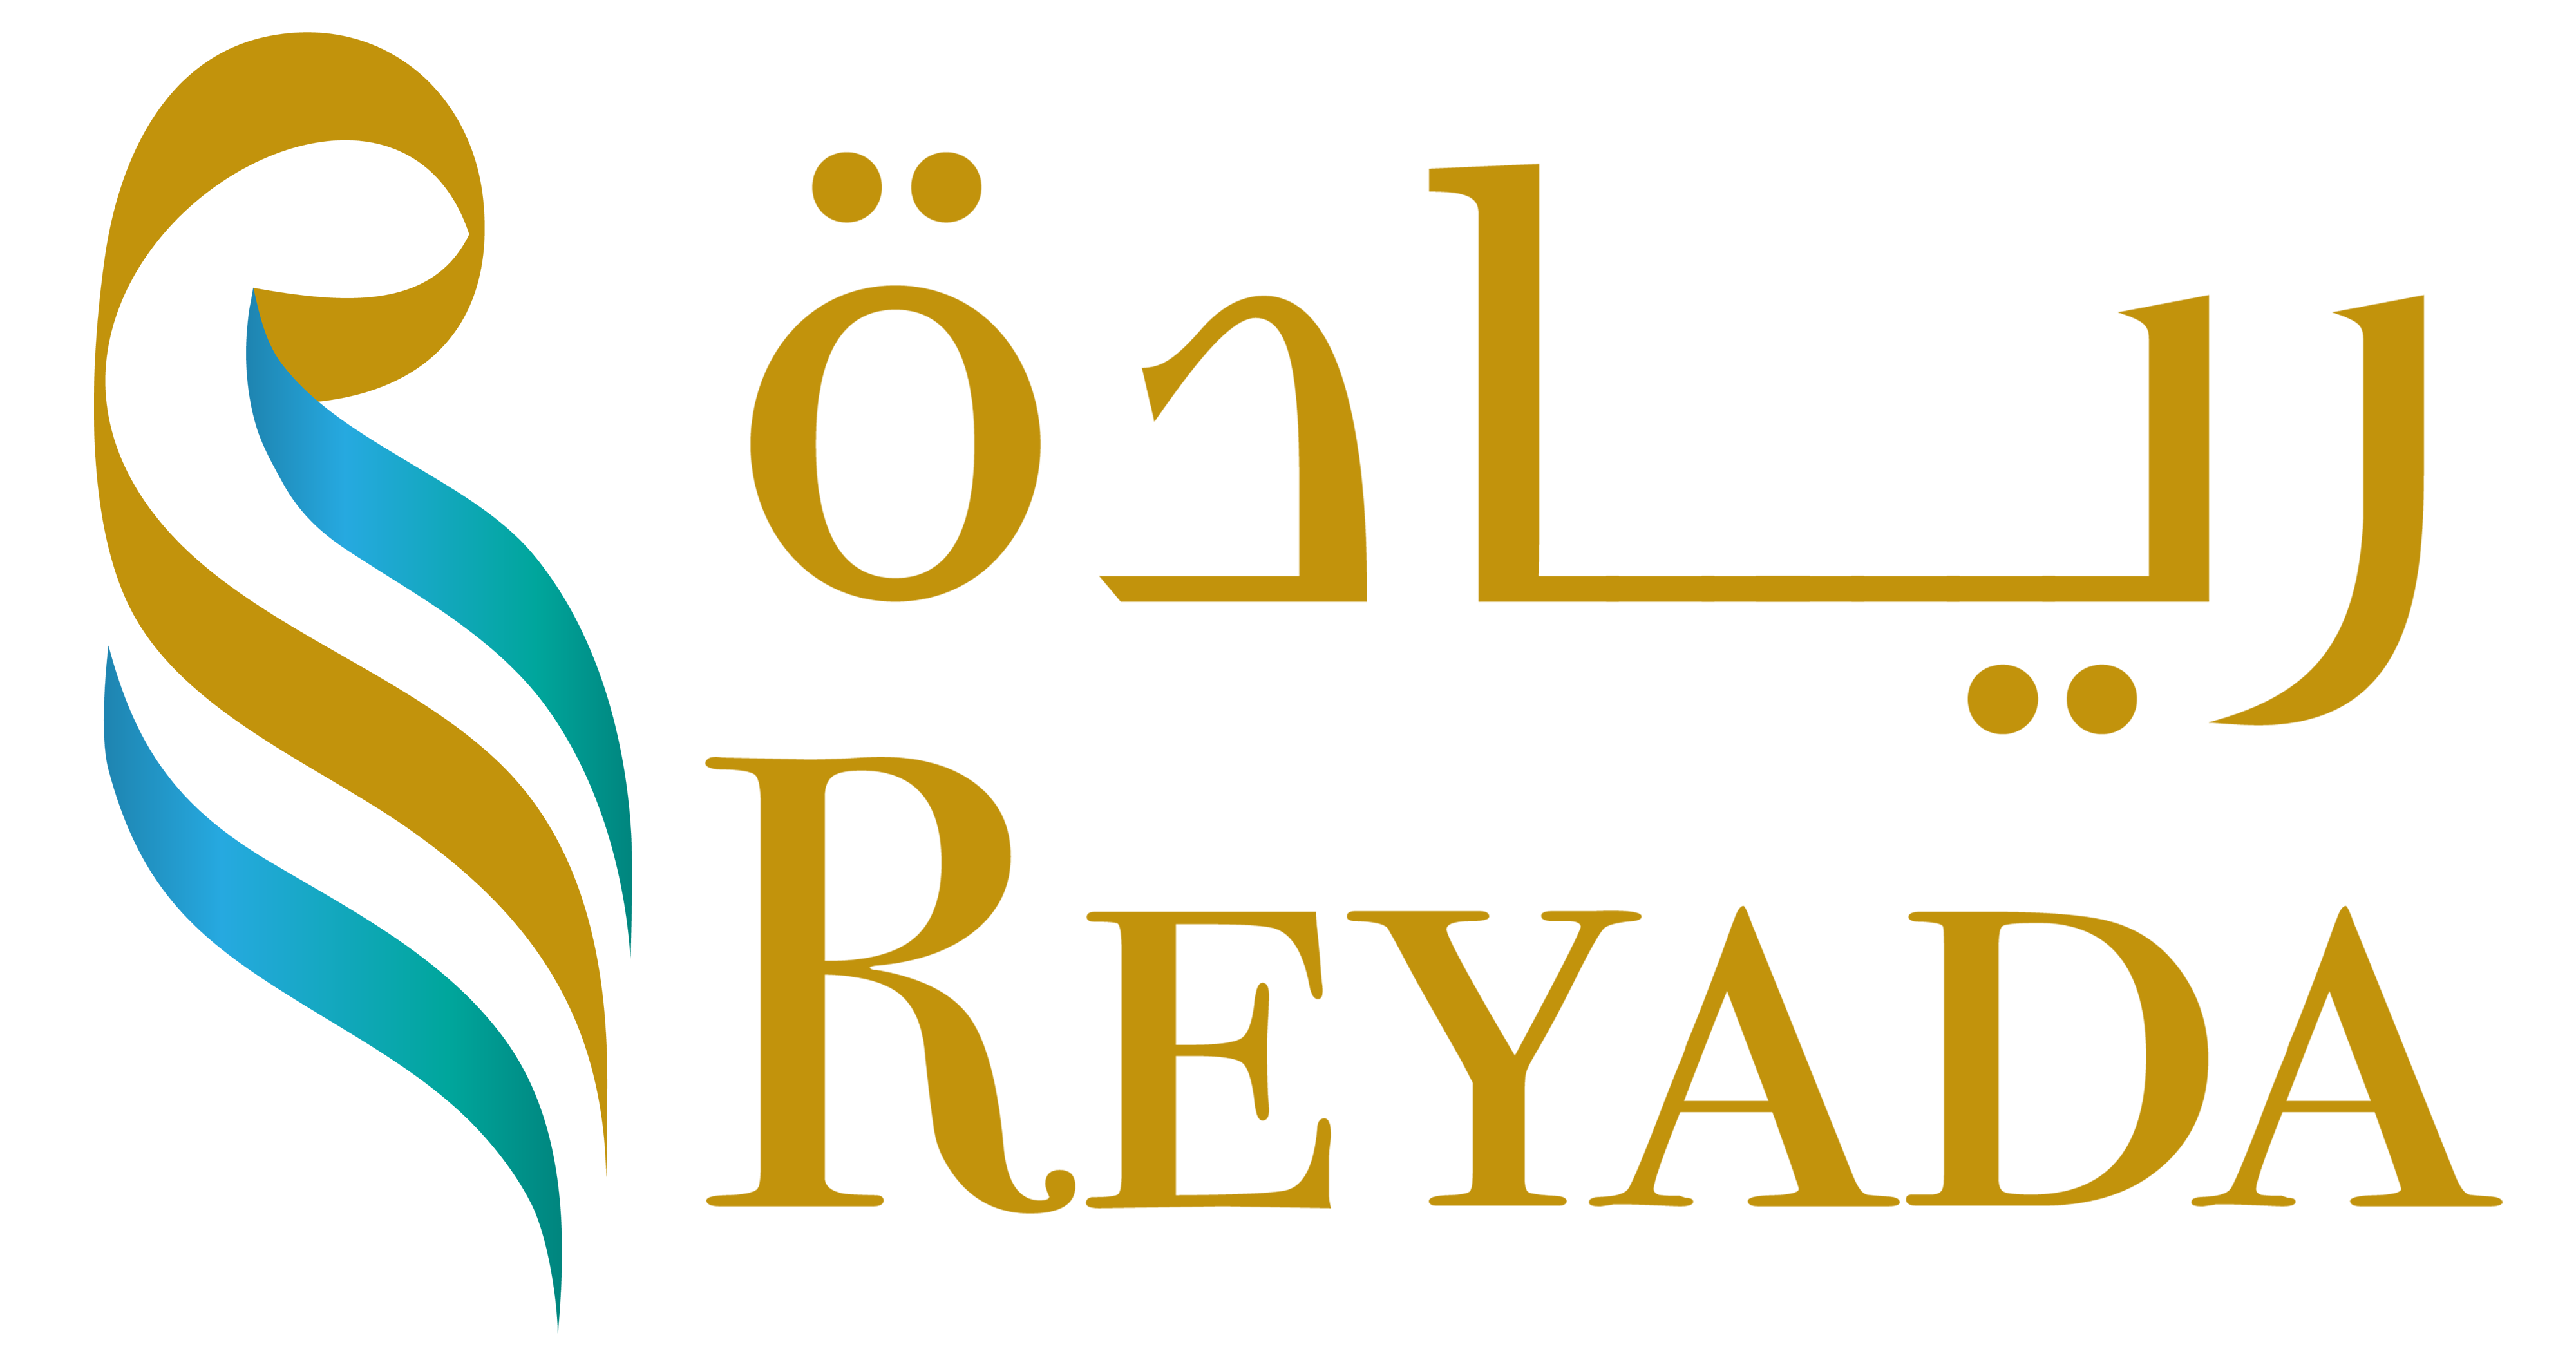 Reyada